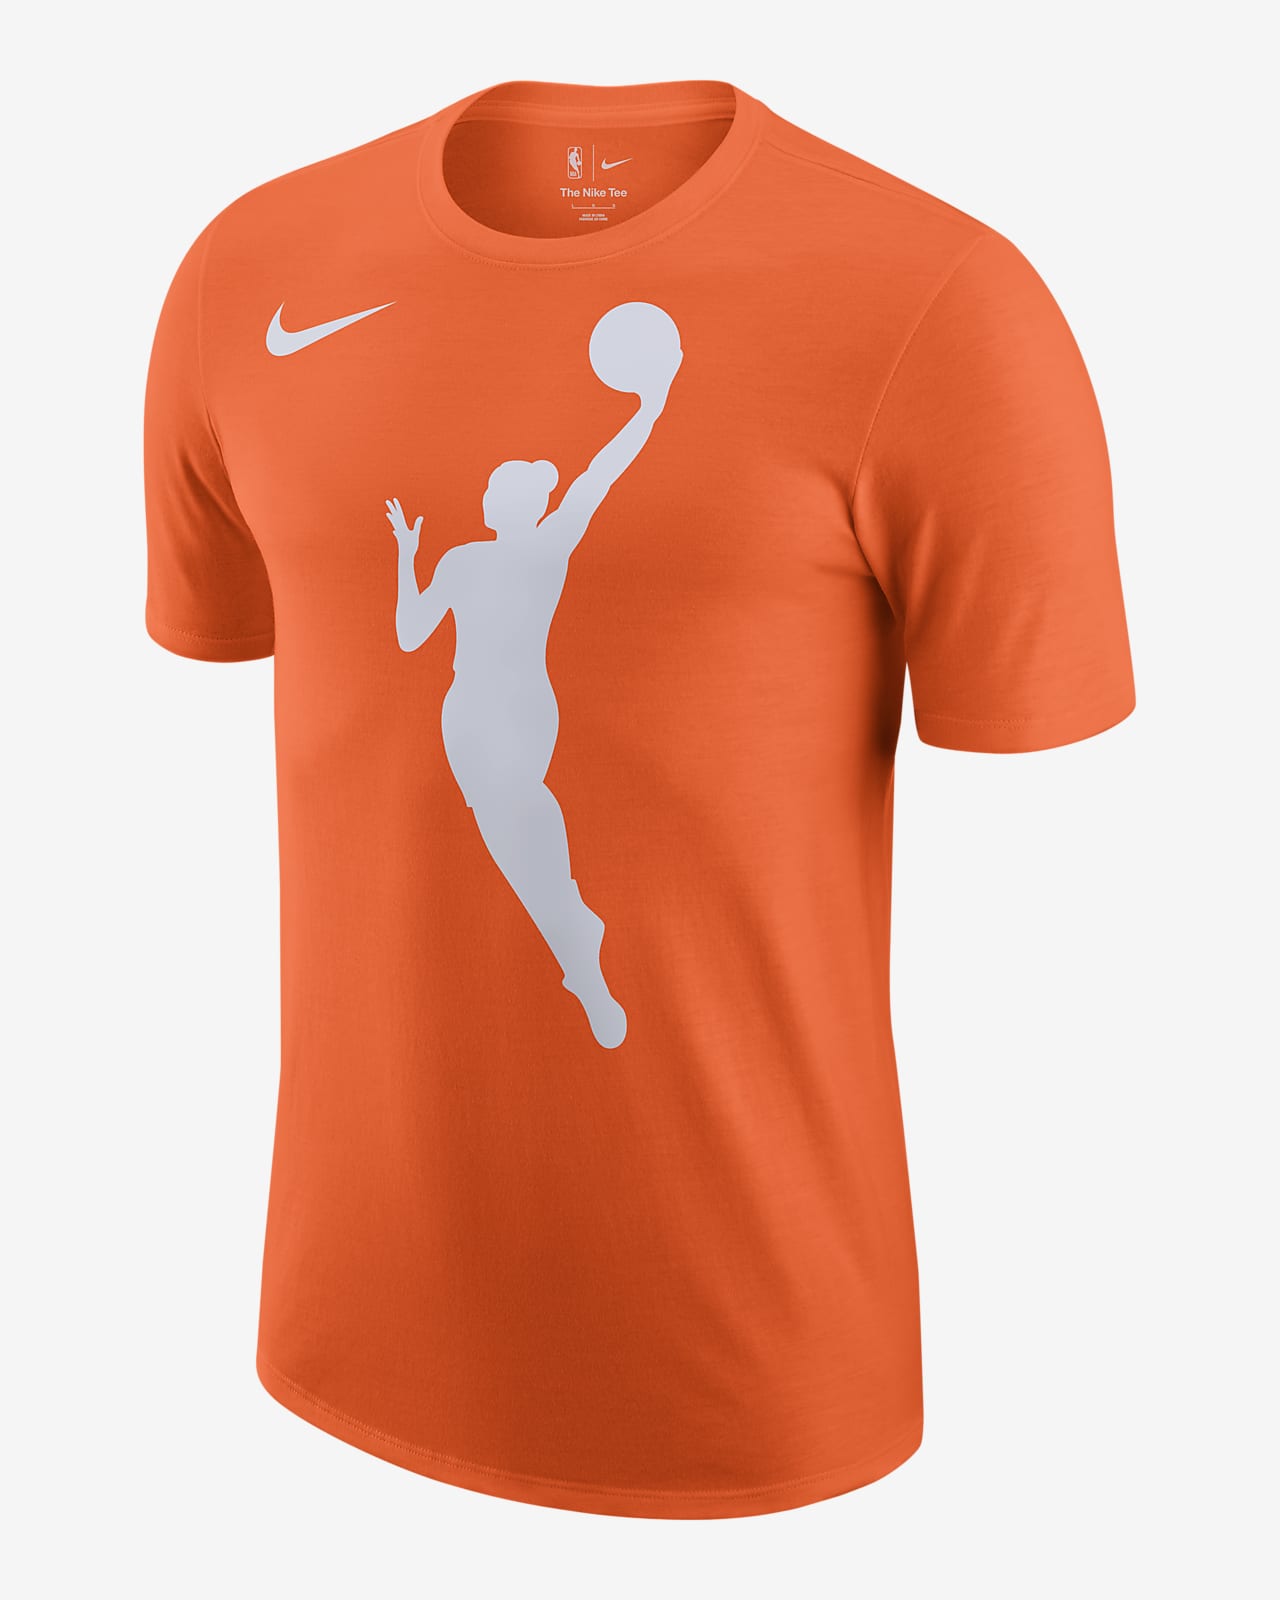 Team 13 Nike WNBA Camiseta